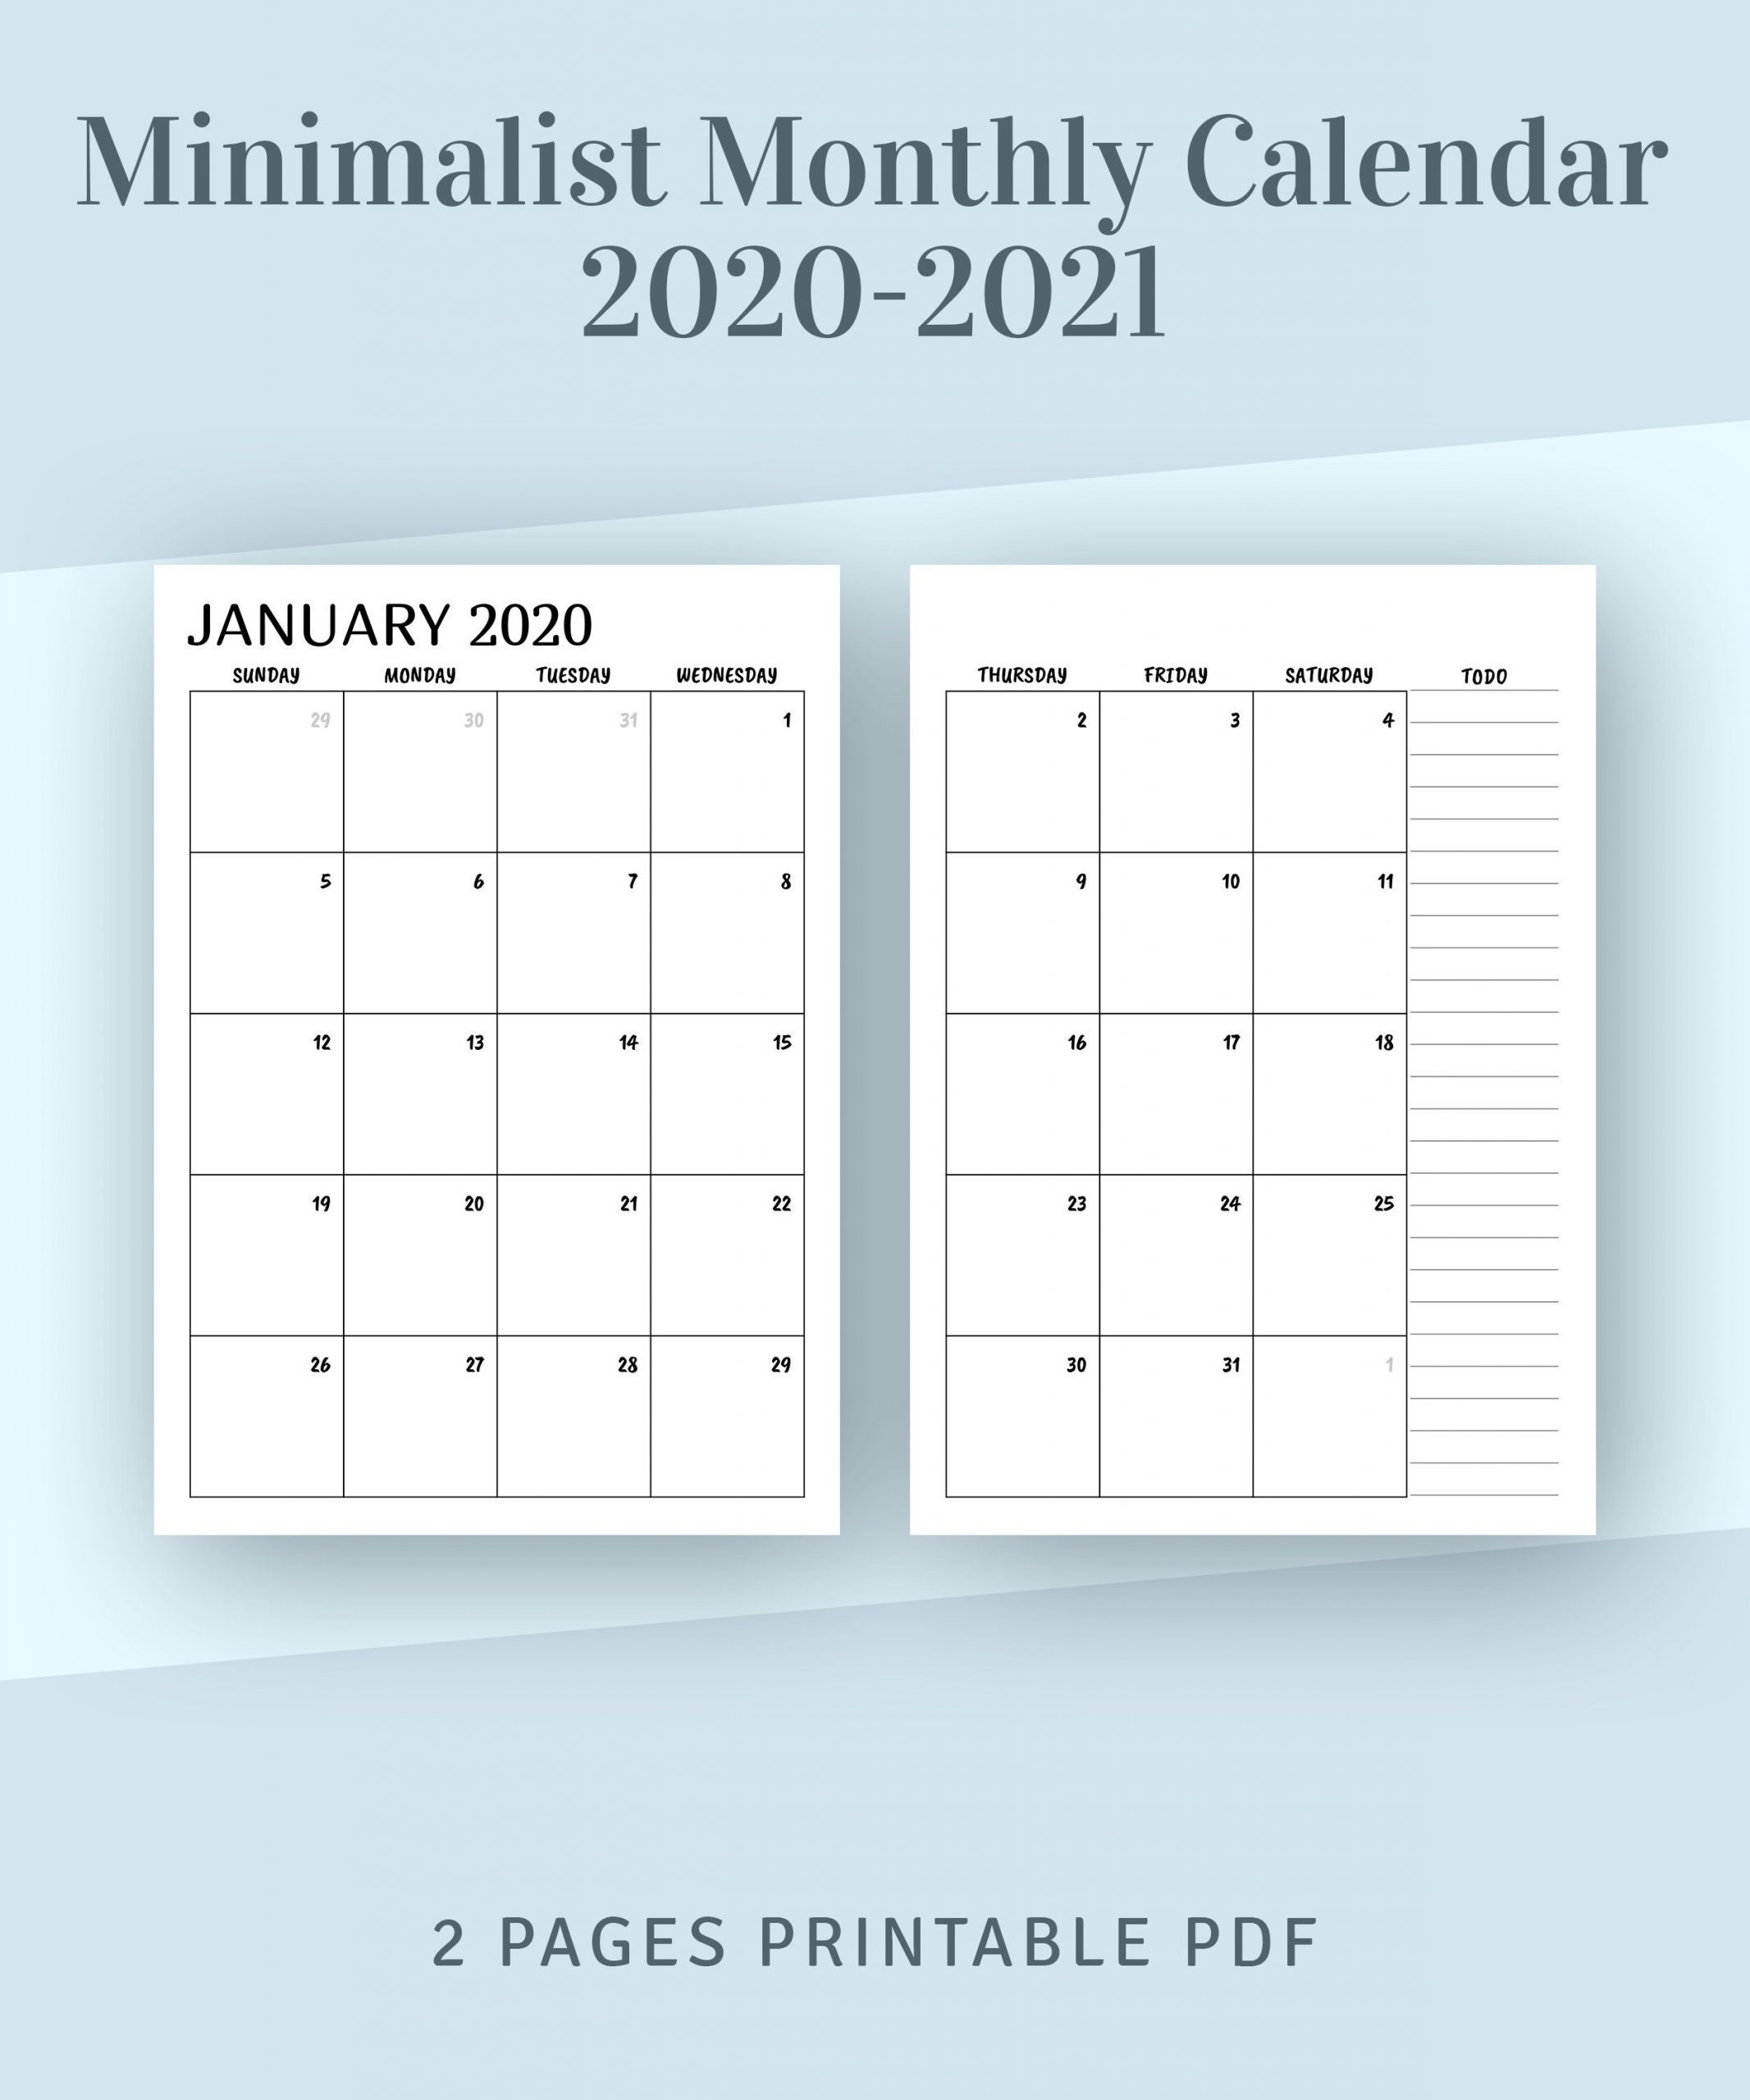 Catch 2 Month Printable Calendar 2021